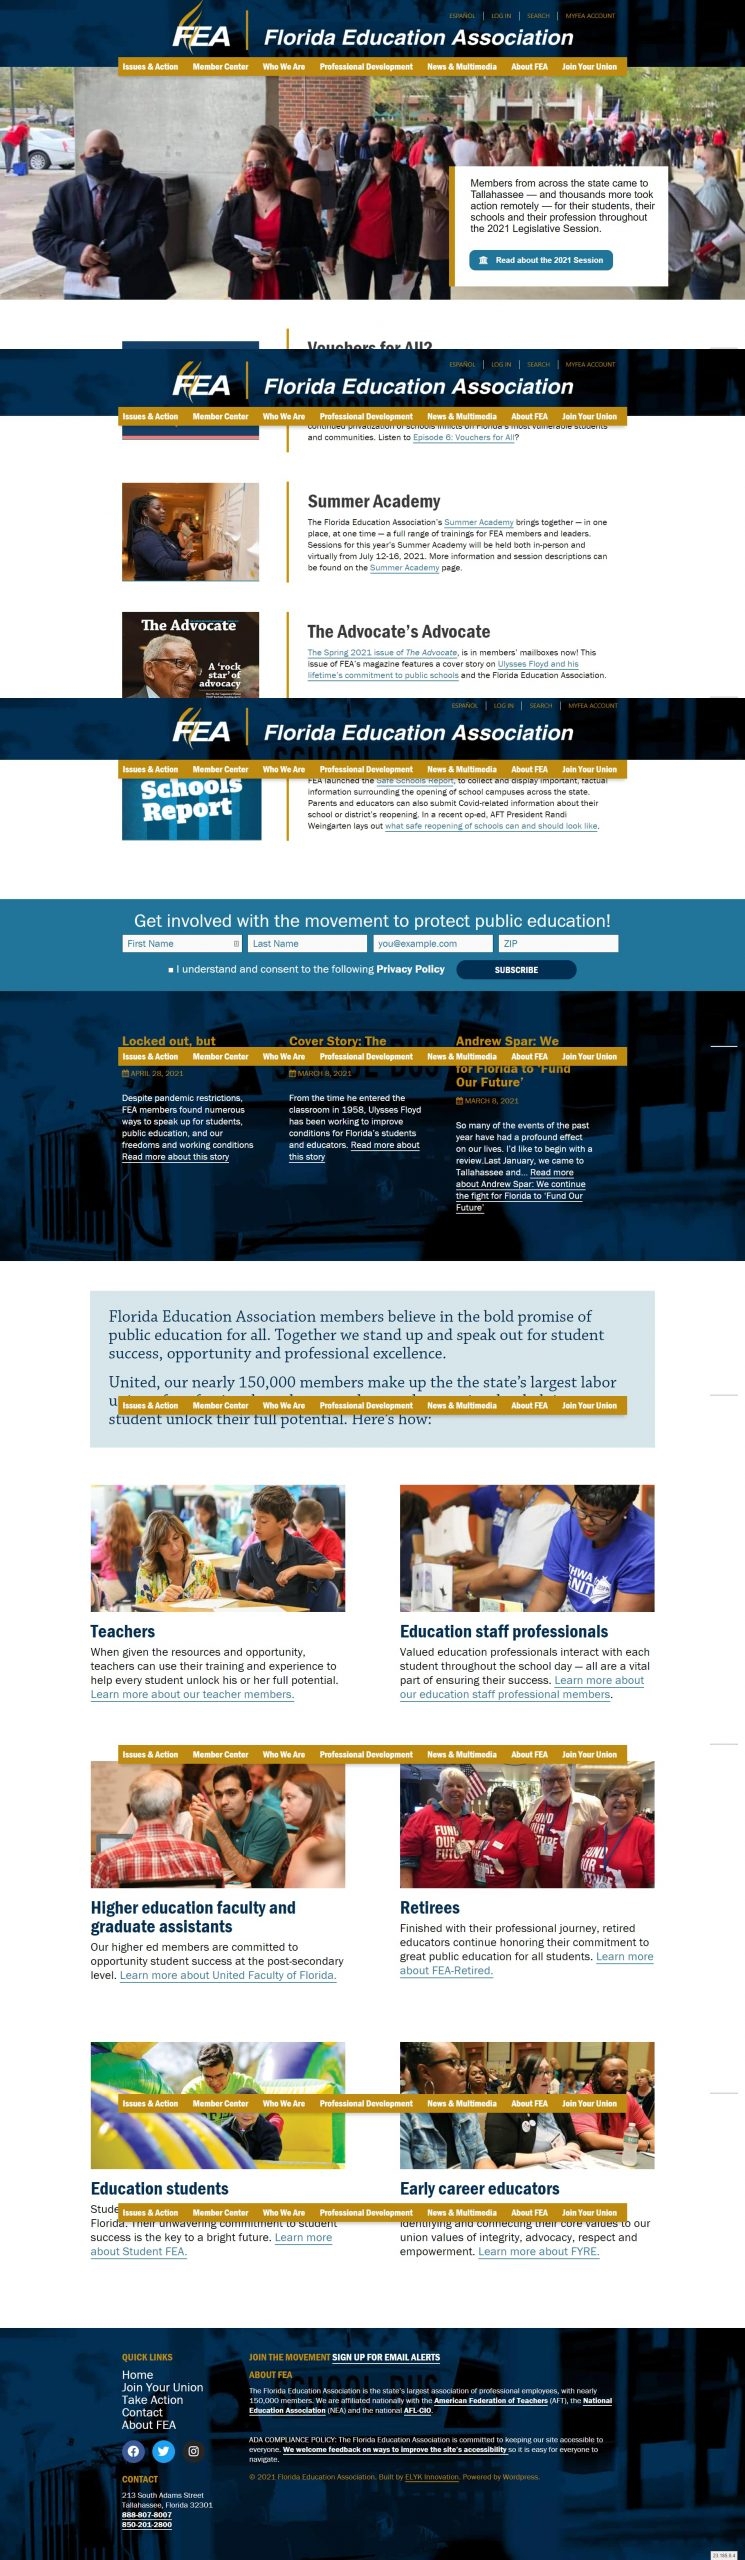 The Florida Education Association Screenshot